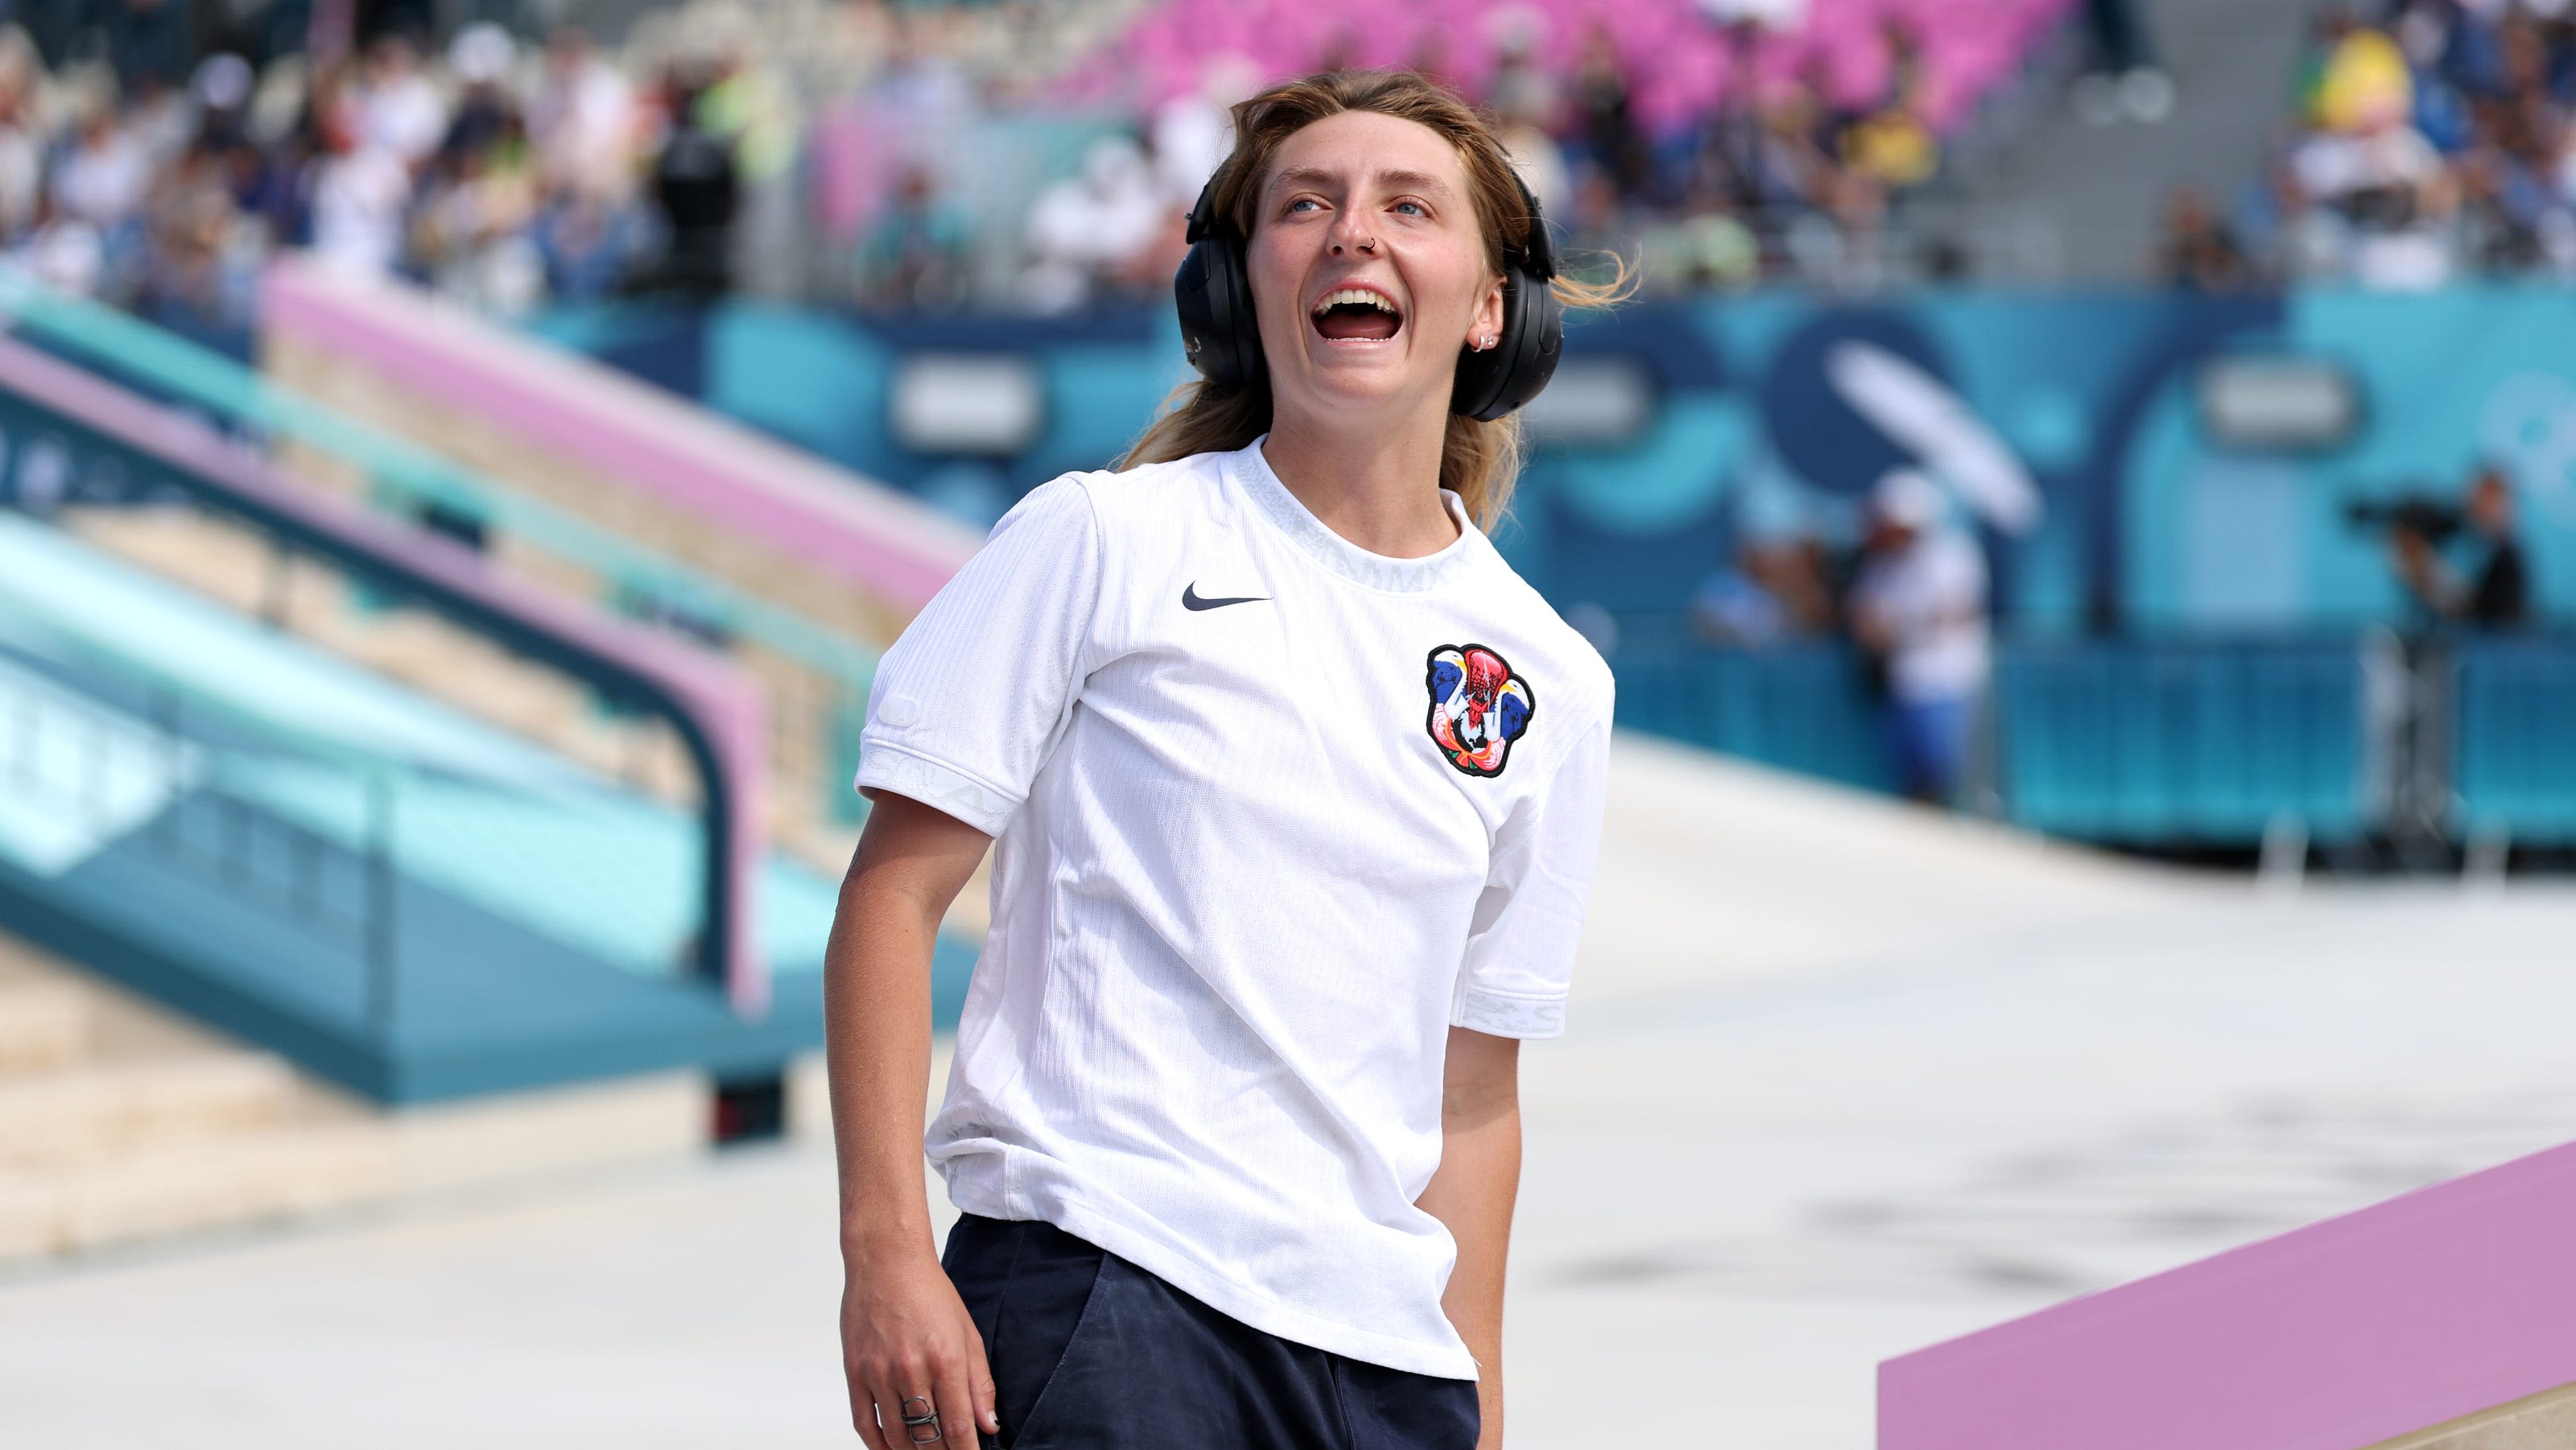 Poe Pinson took flight to reach Olympic street skateboarding final: Where did she finish?